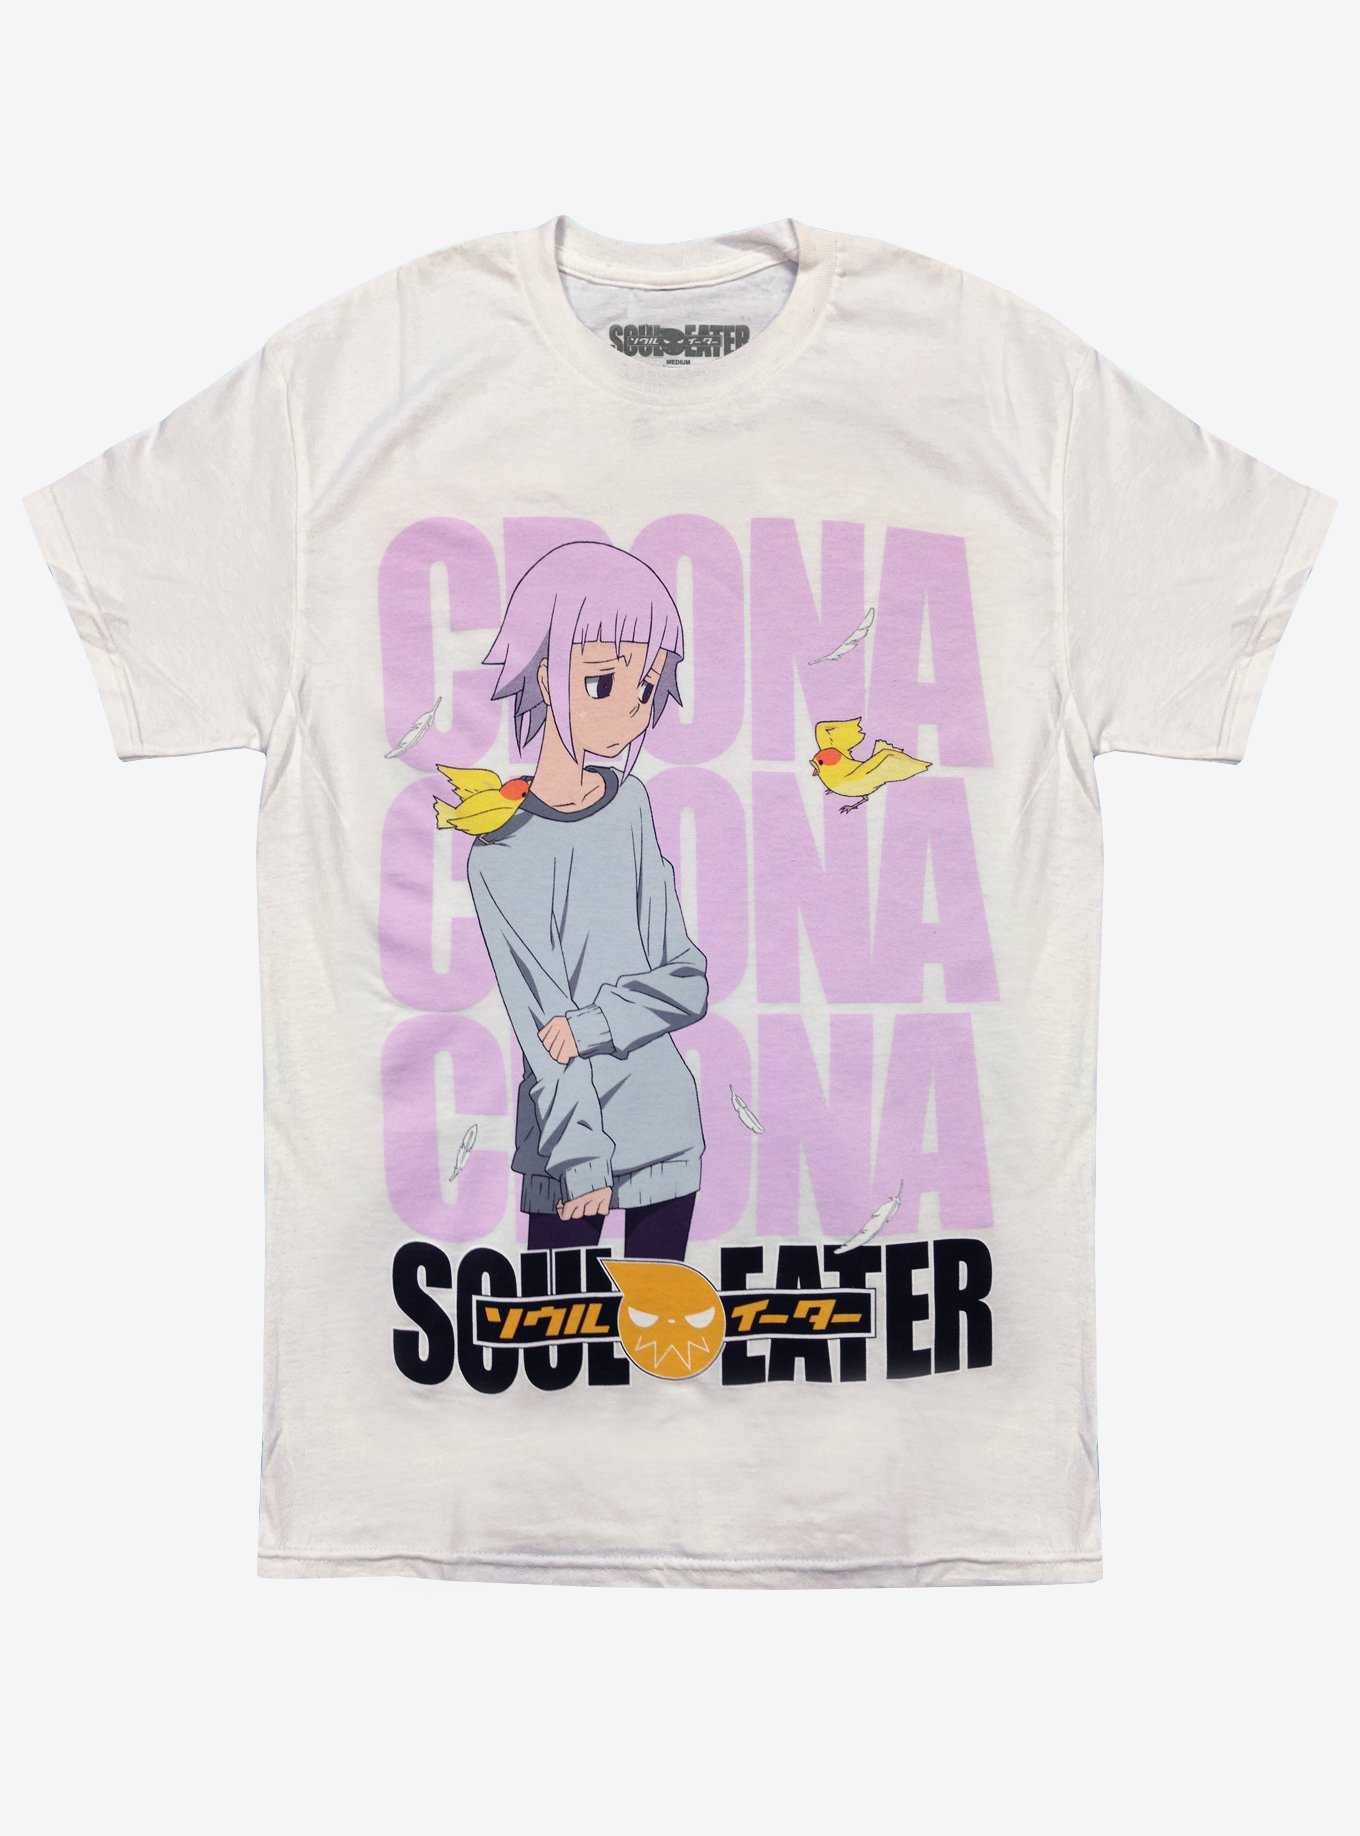 Soul Eater Crona Boyfriend Fit Girls T-Shirt, MULTI, hi-res